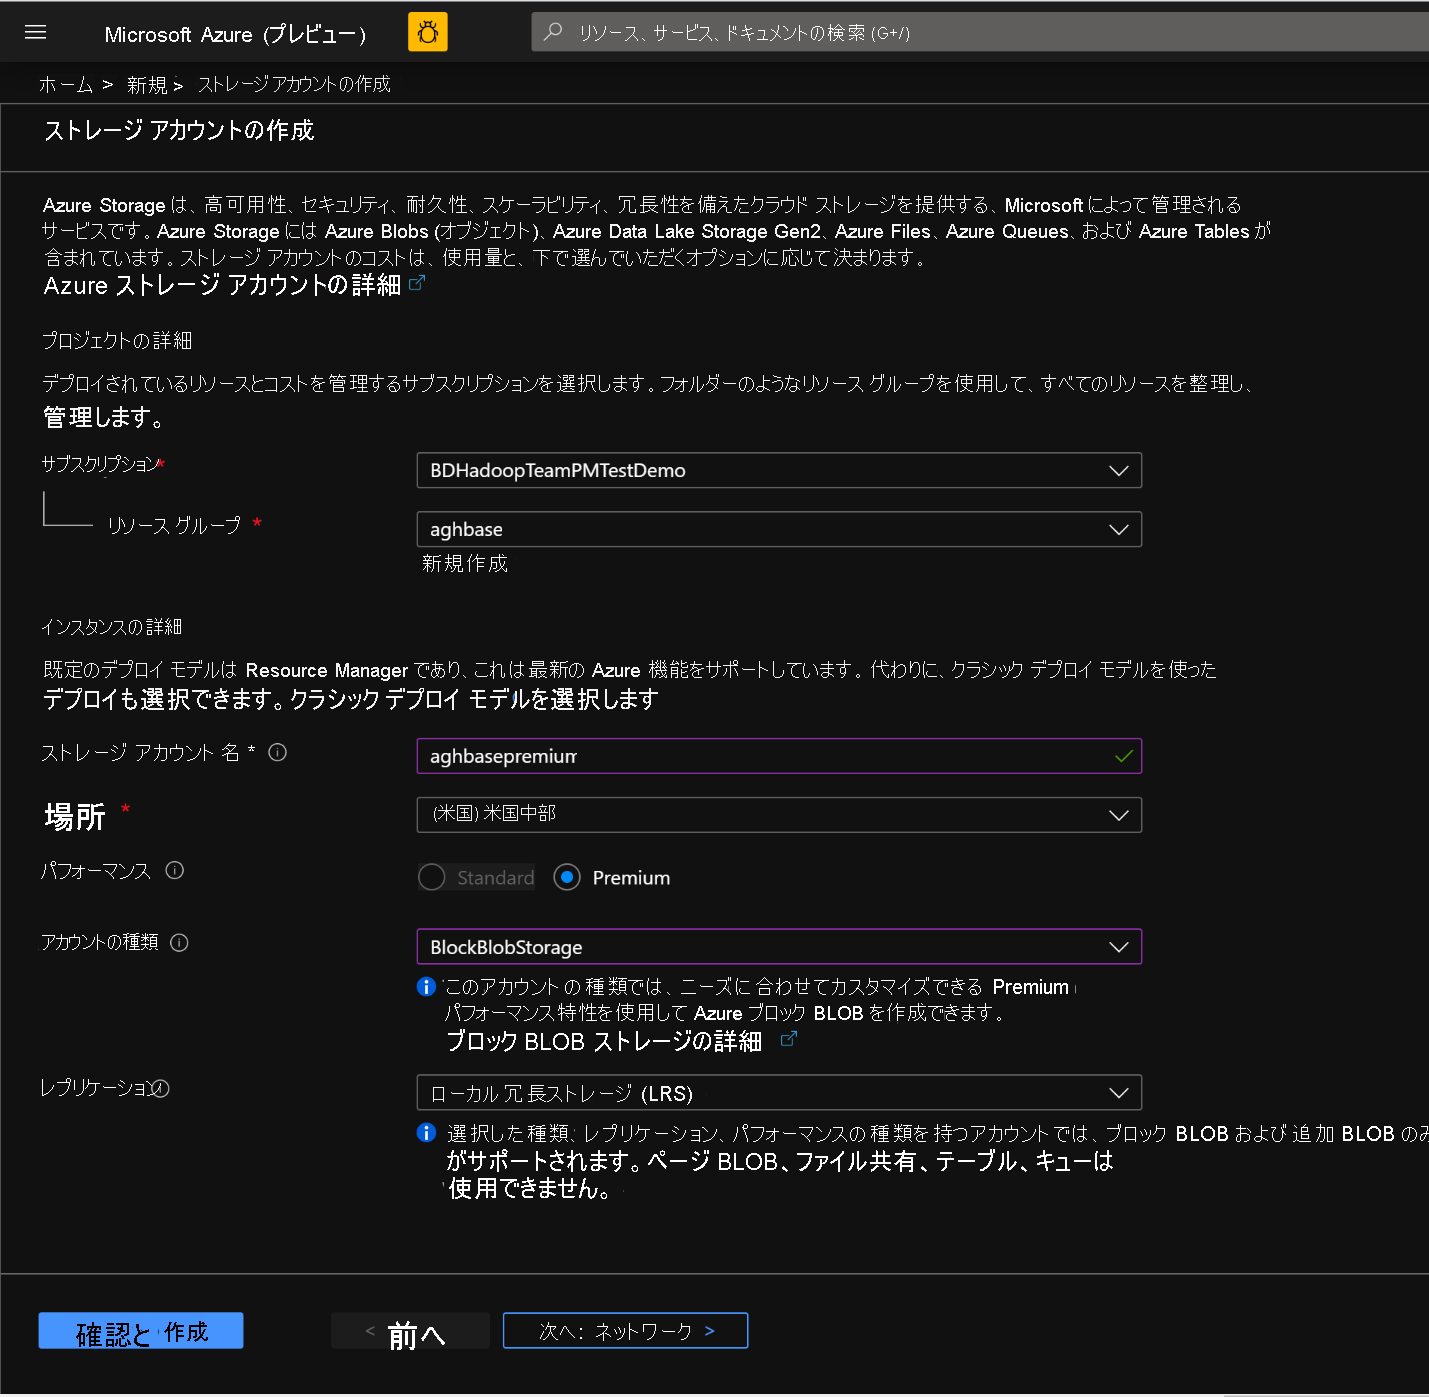 Create storage account screen in the Azure Portal.